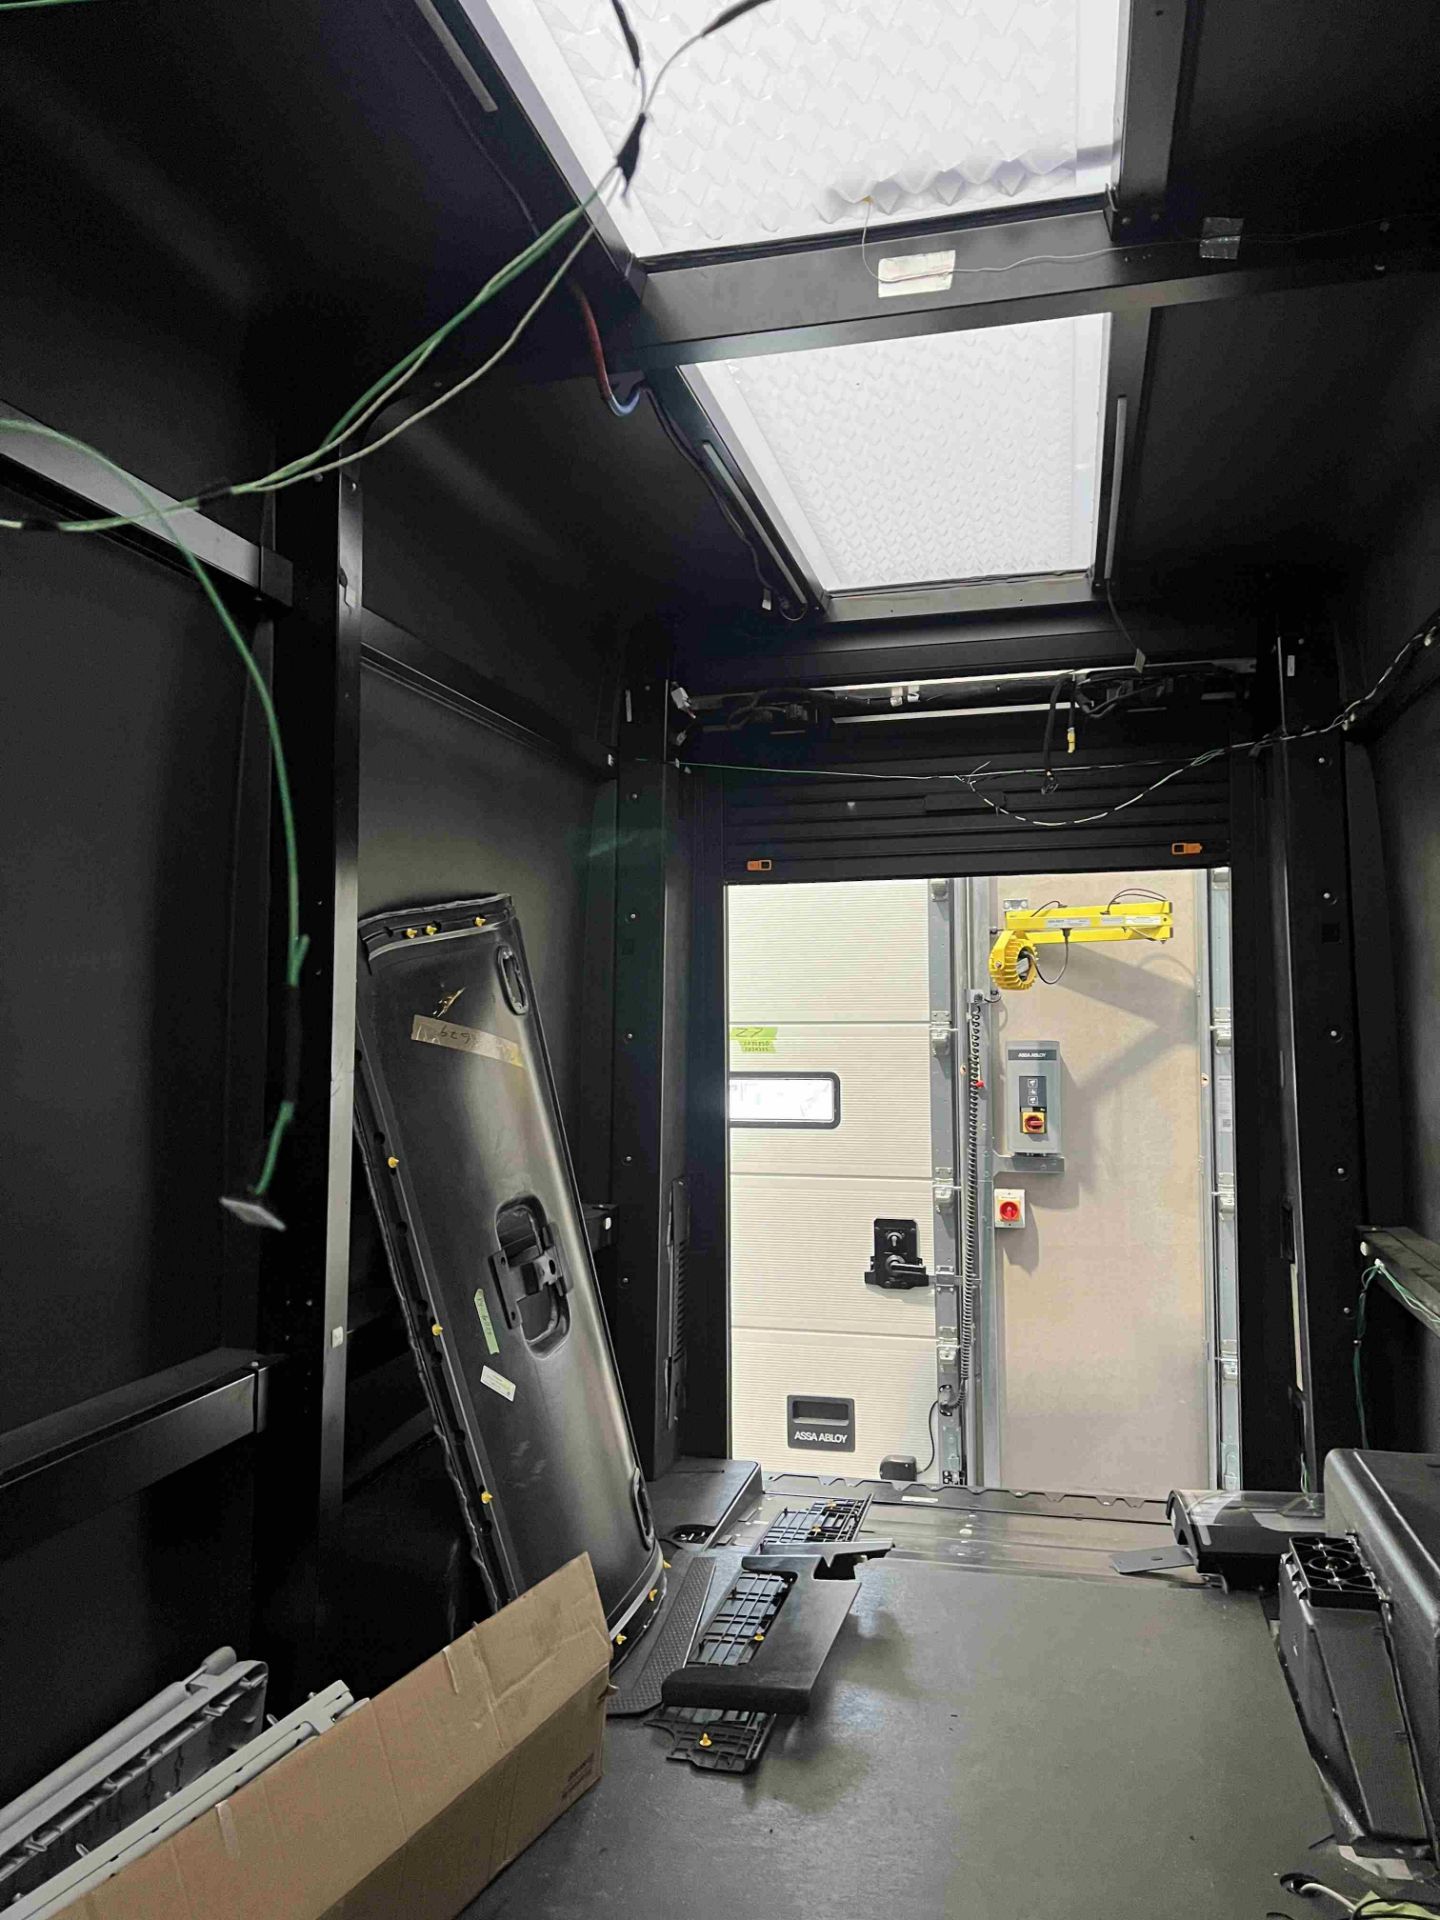 Arrival, development prototype electric delivery van with driver side door, passenger side sliding - Image 15 of 17